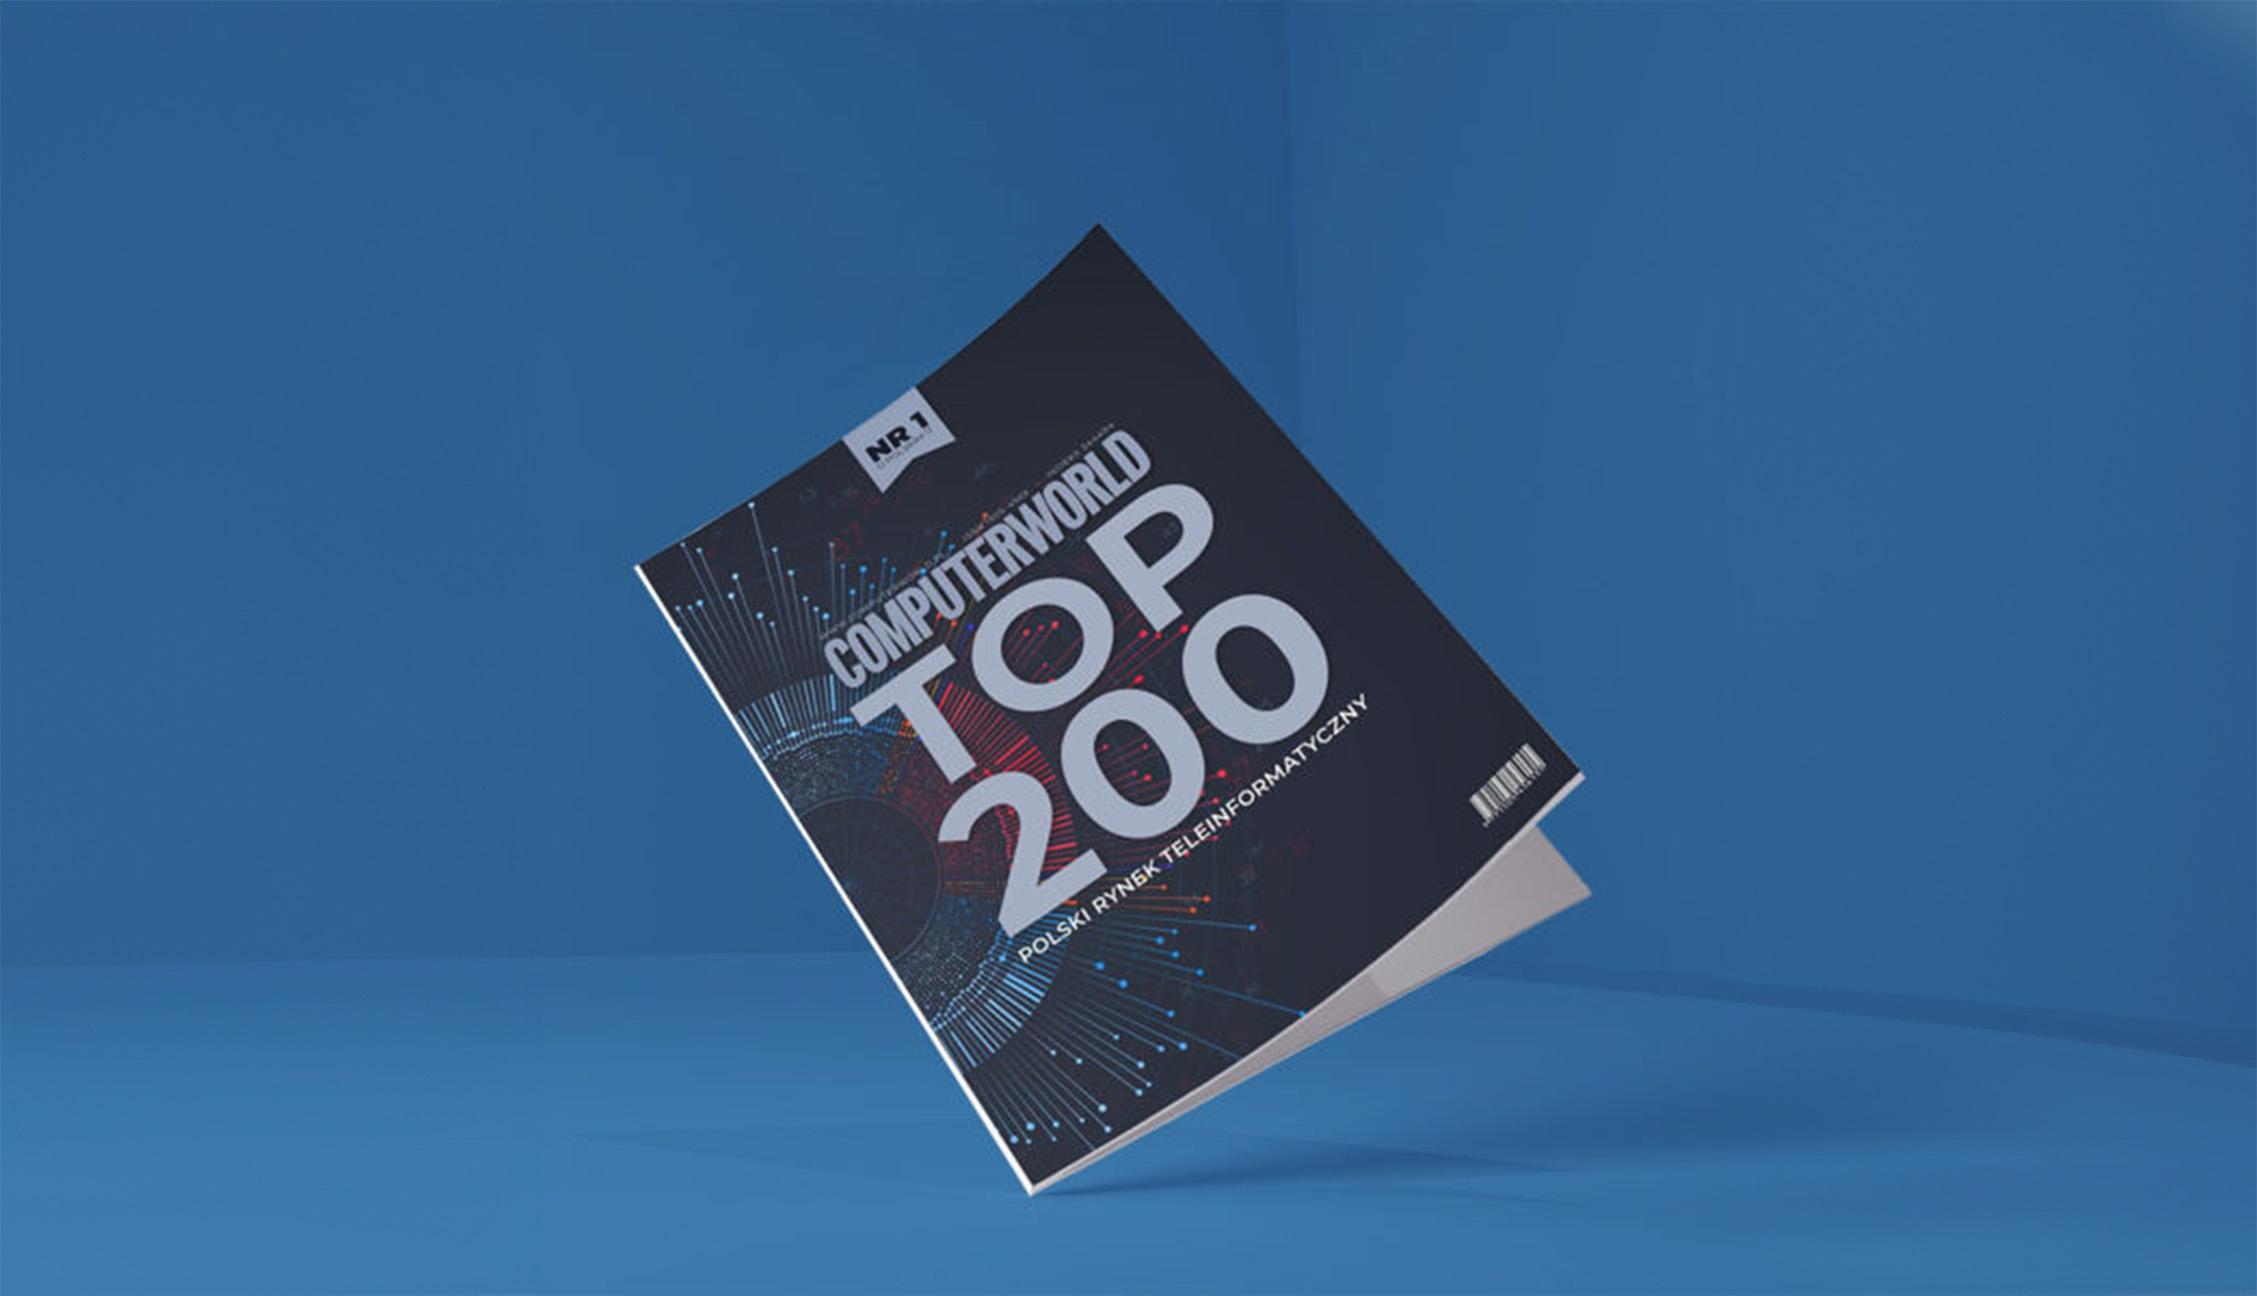 top200 computerworld book